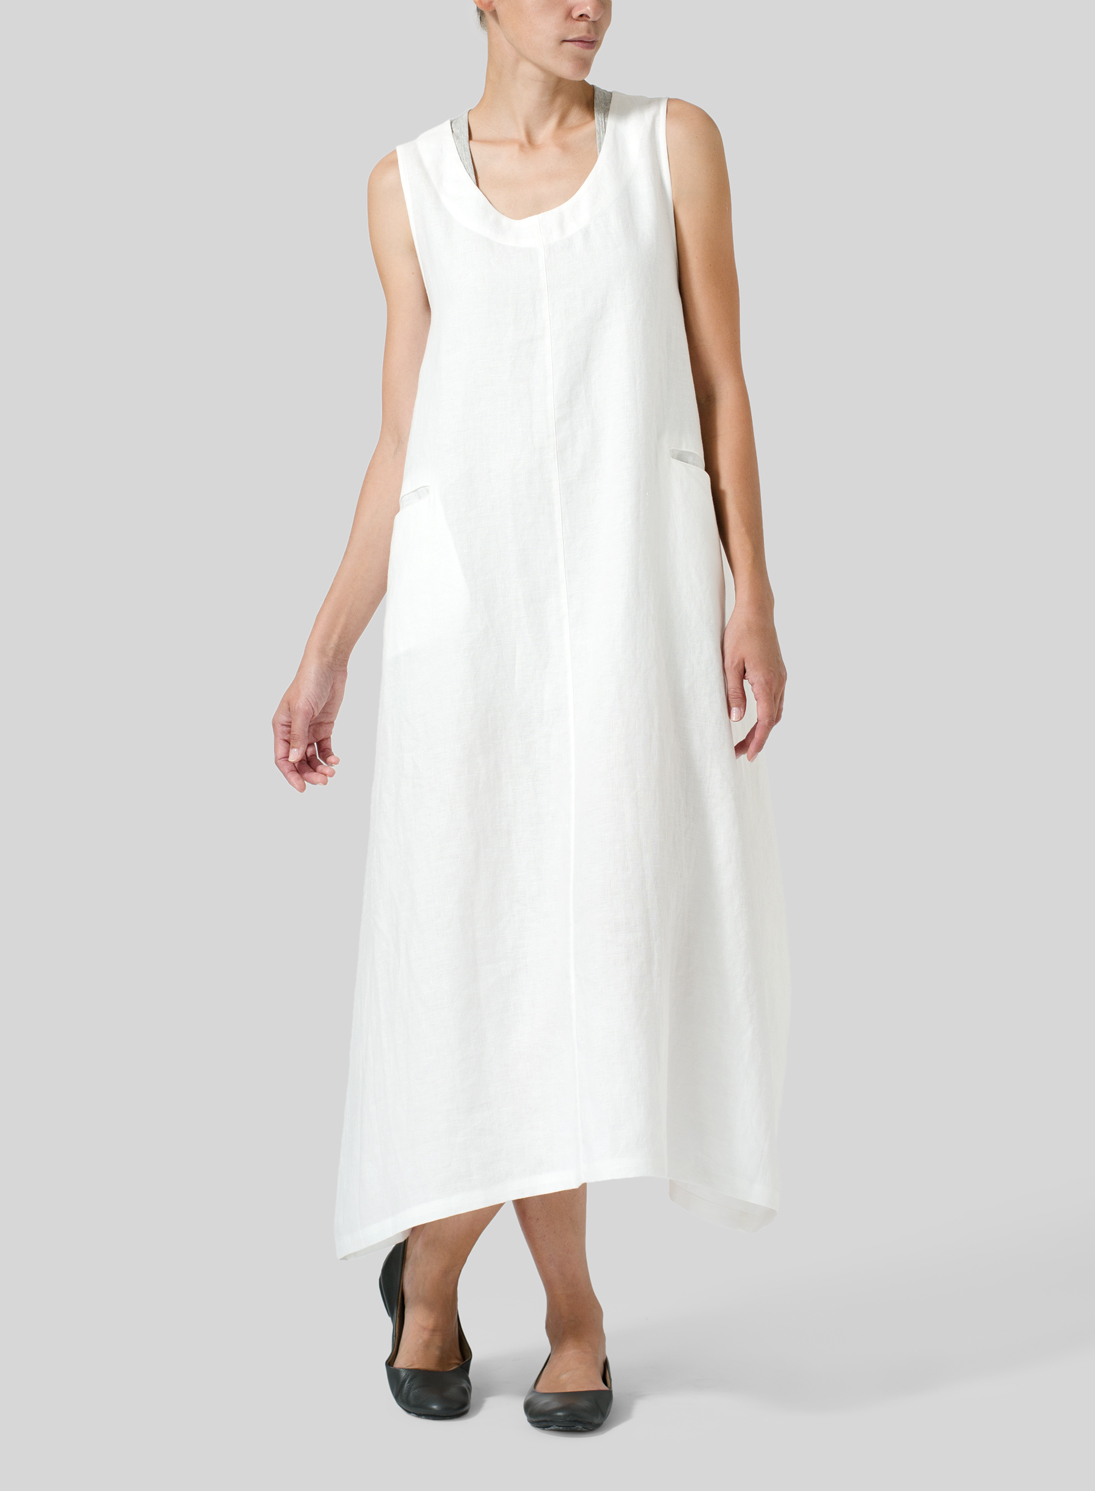 Linen Sleeveless Long Dress - Plus Size